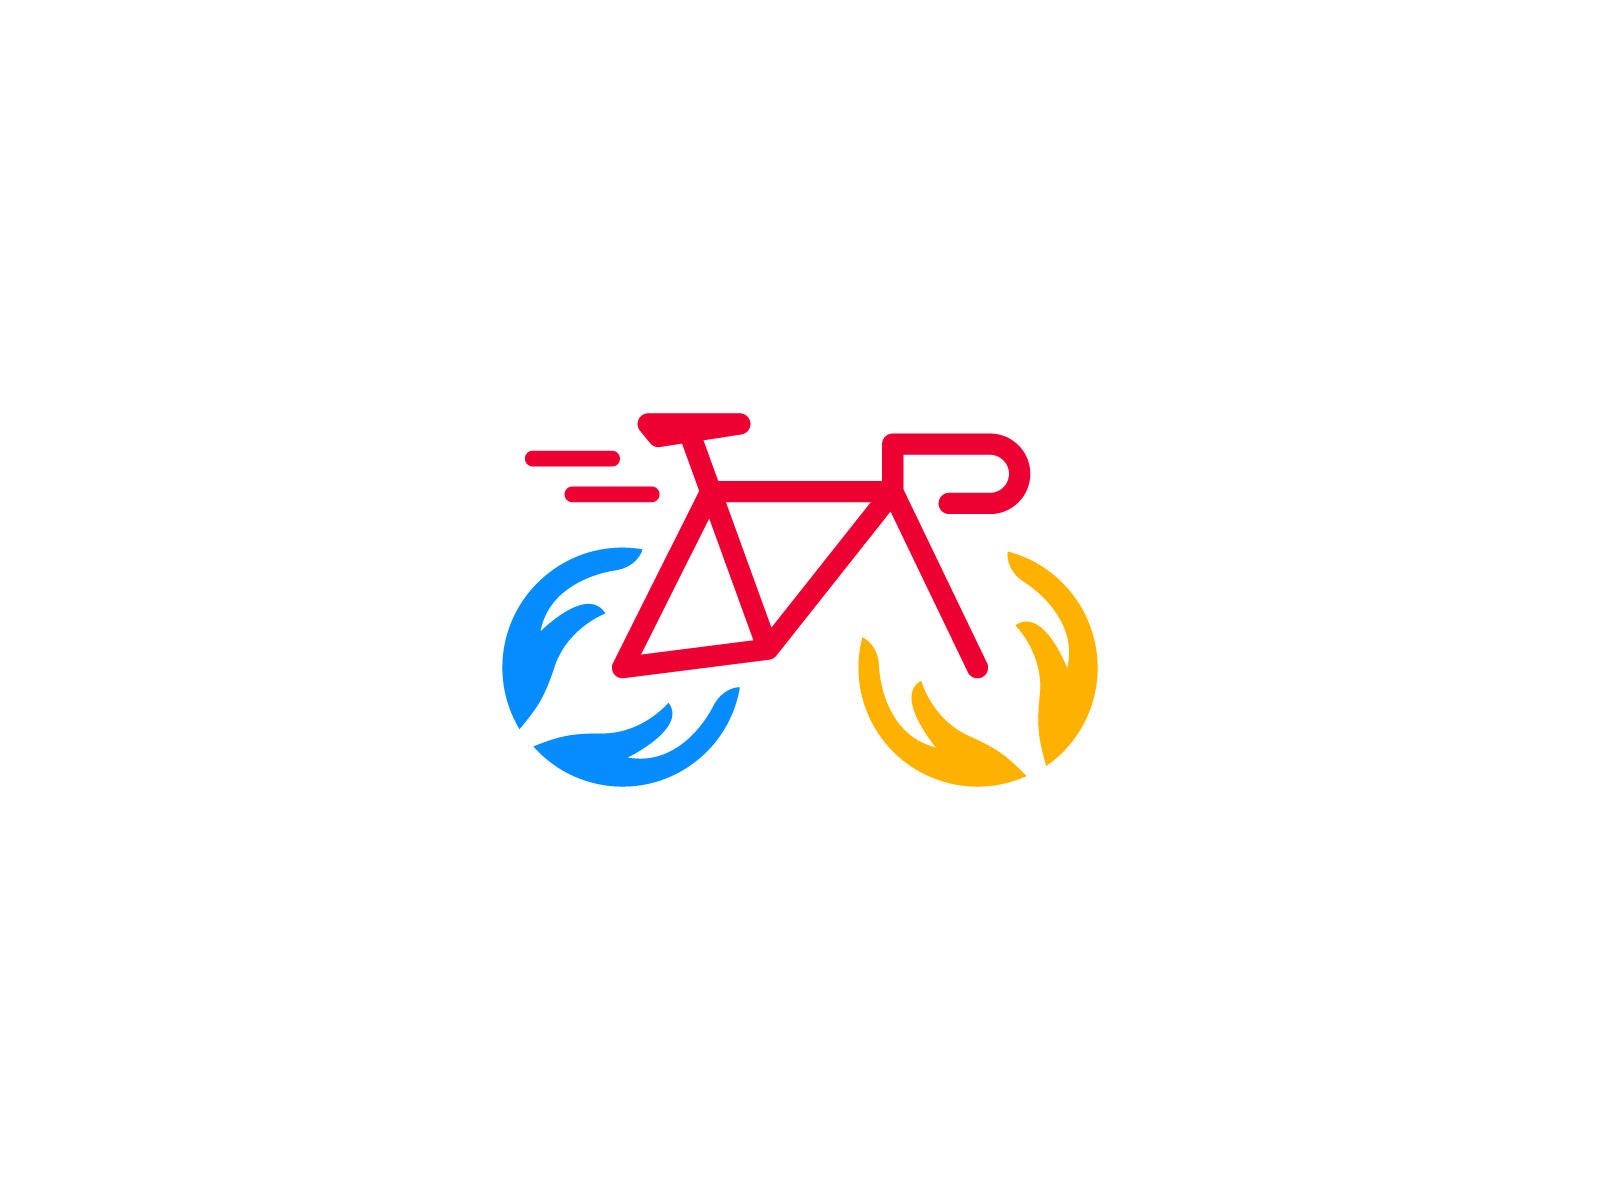 Bike logo and symbols vector 620045 Vector Art at Vecteezy